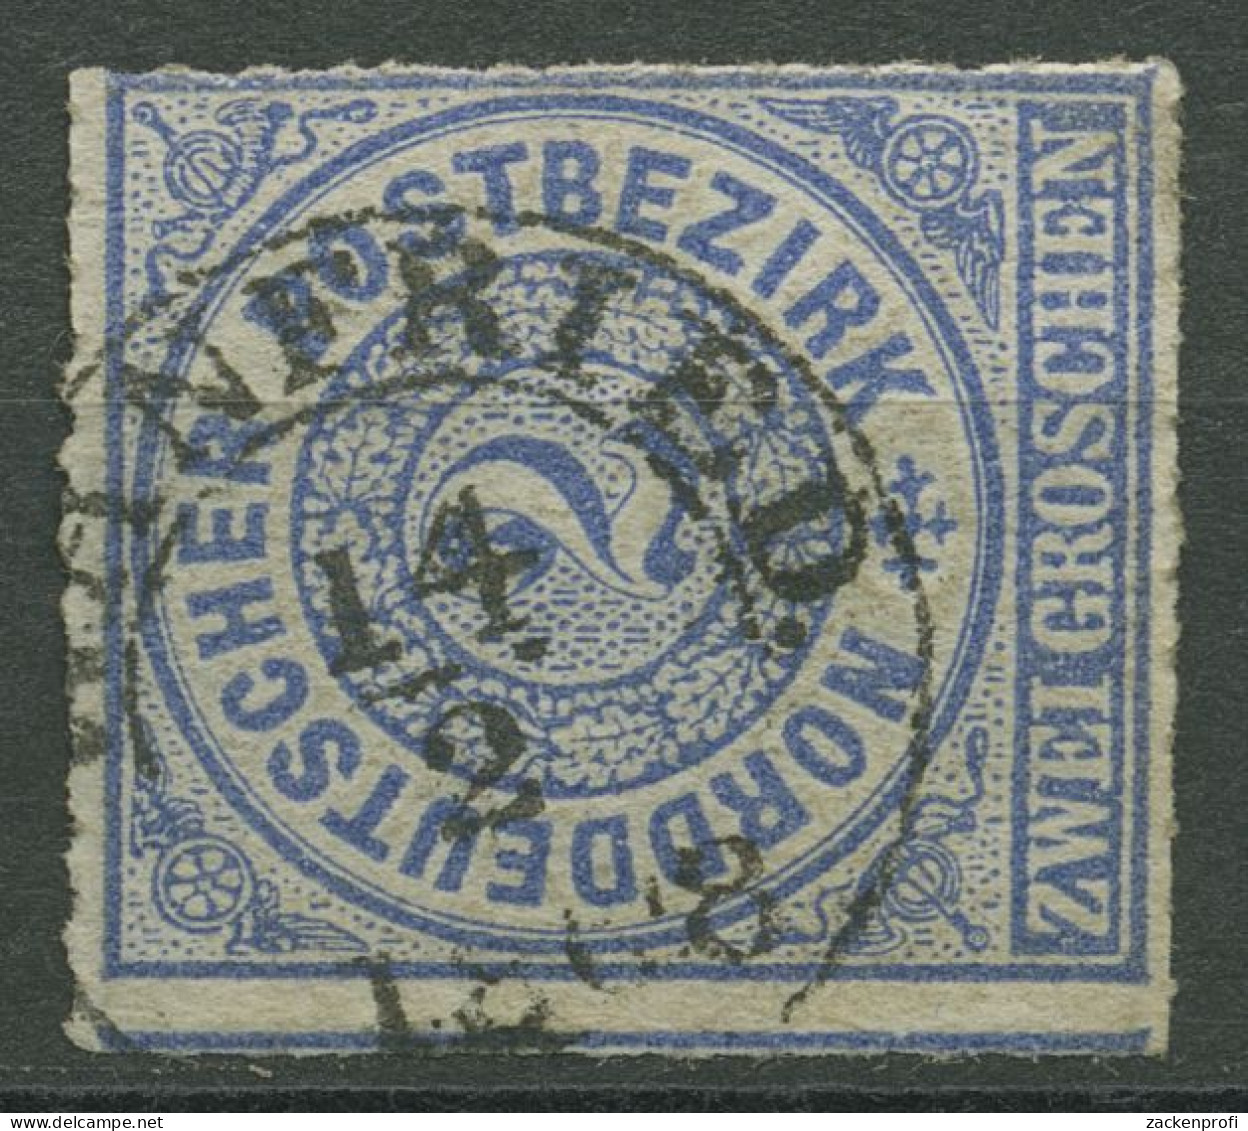 Norddeutscher Postbezirk NDP 1868 2 Groschen 5 Mit T&T-K2-Stempel WANFRIED - Oblitérés